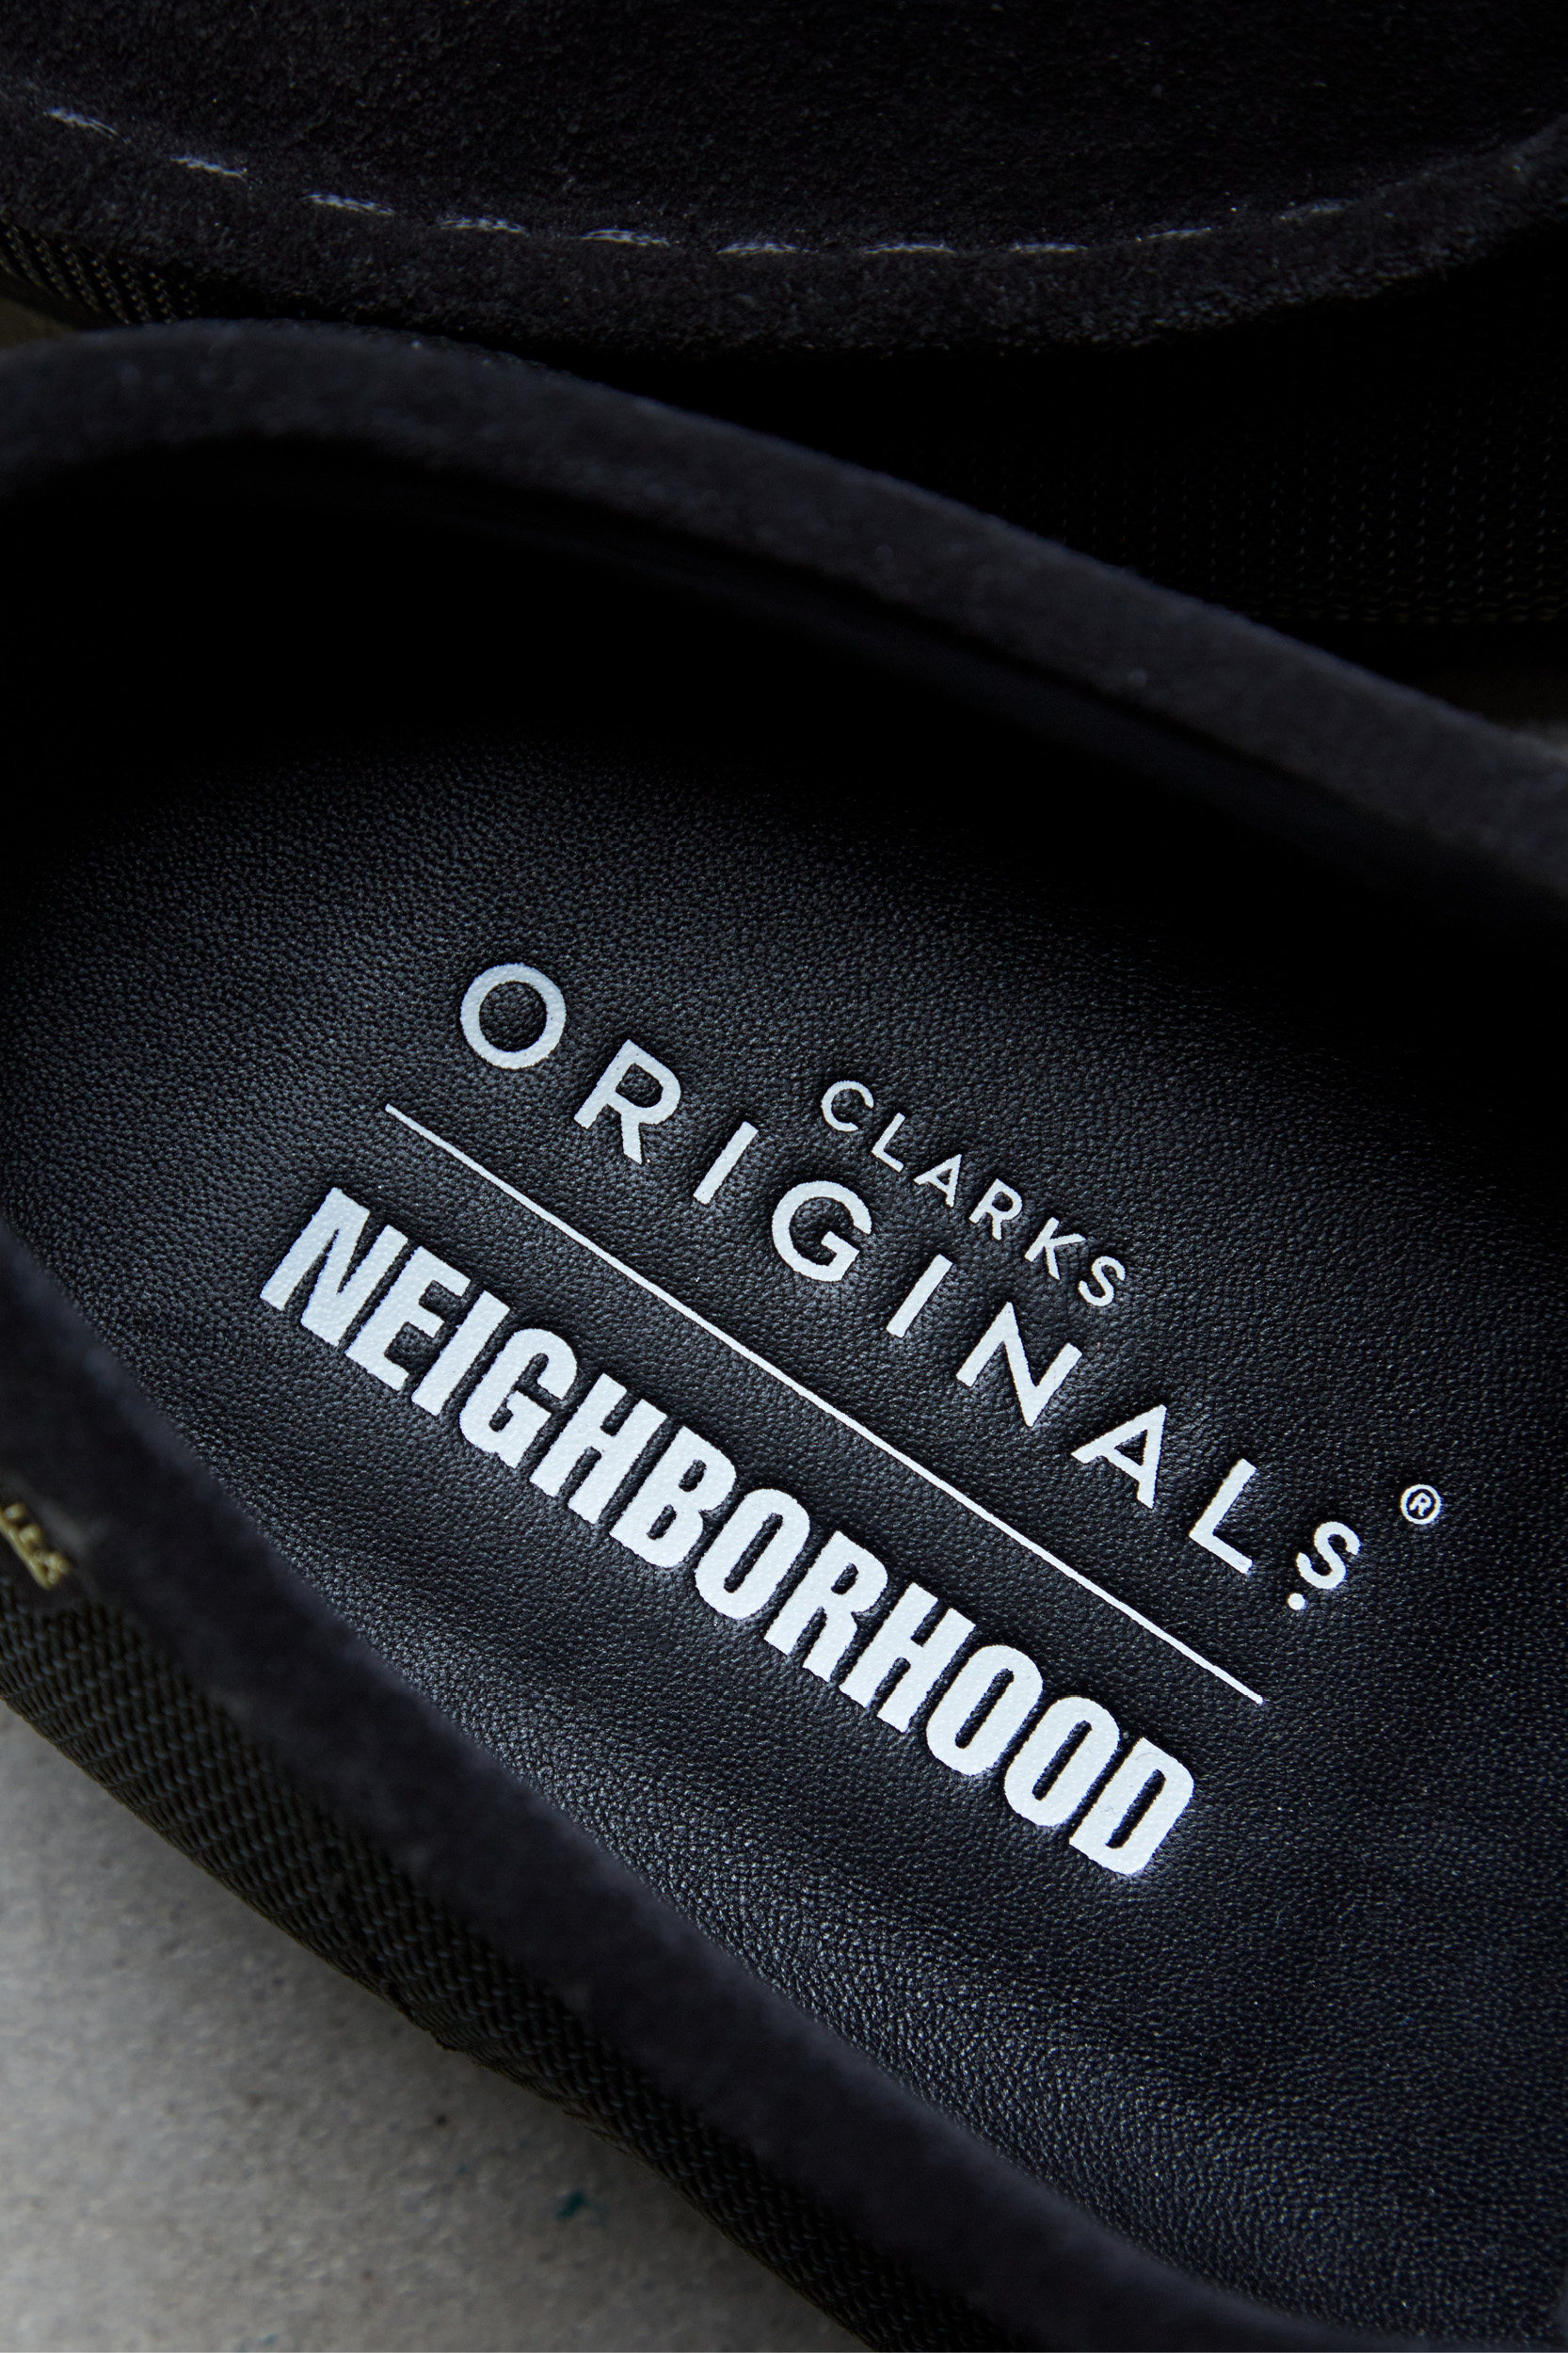 Clarks Originals x Neighborhood   Register Now on END. Launches